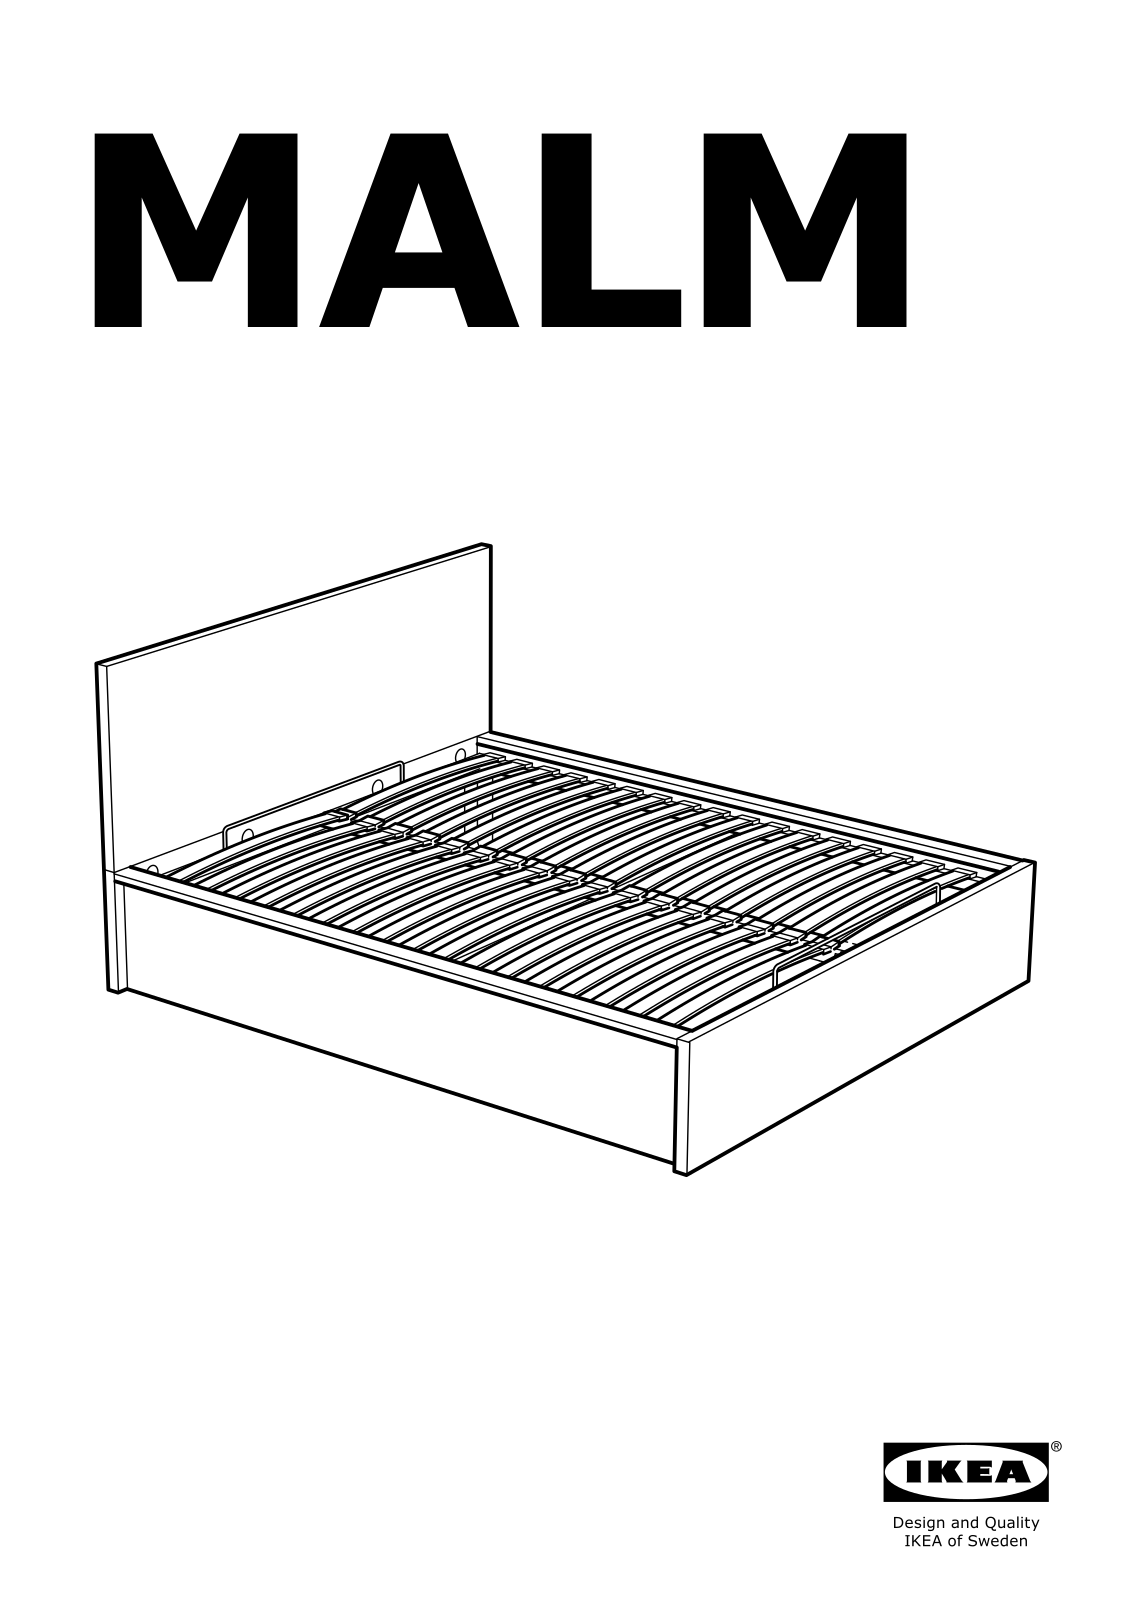 IKEA MALM Storage bed Assembly Instruction